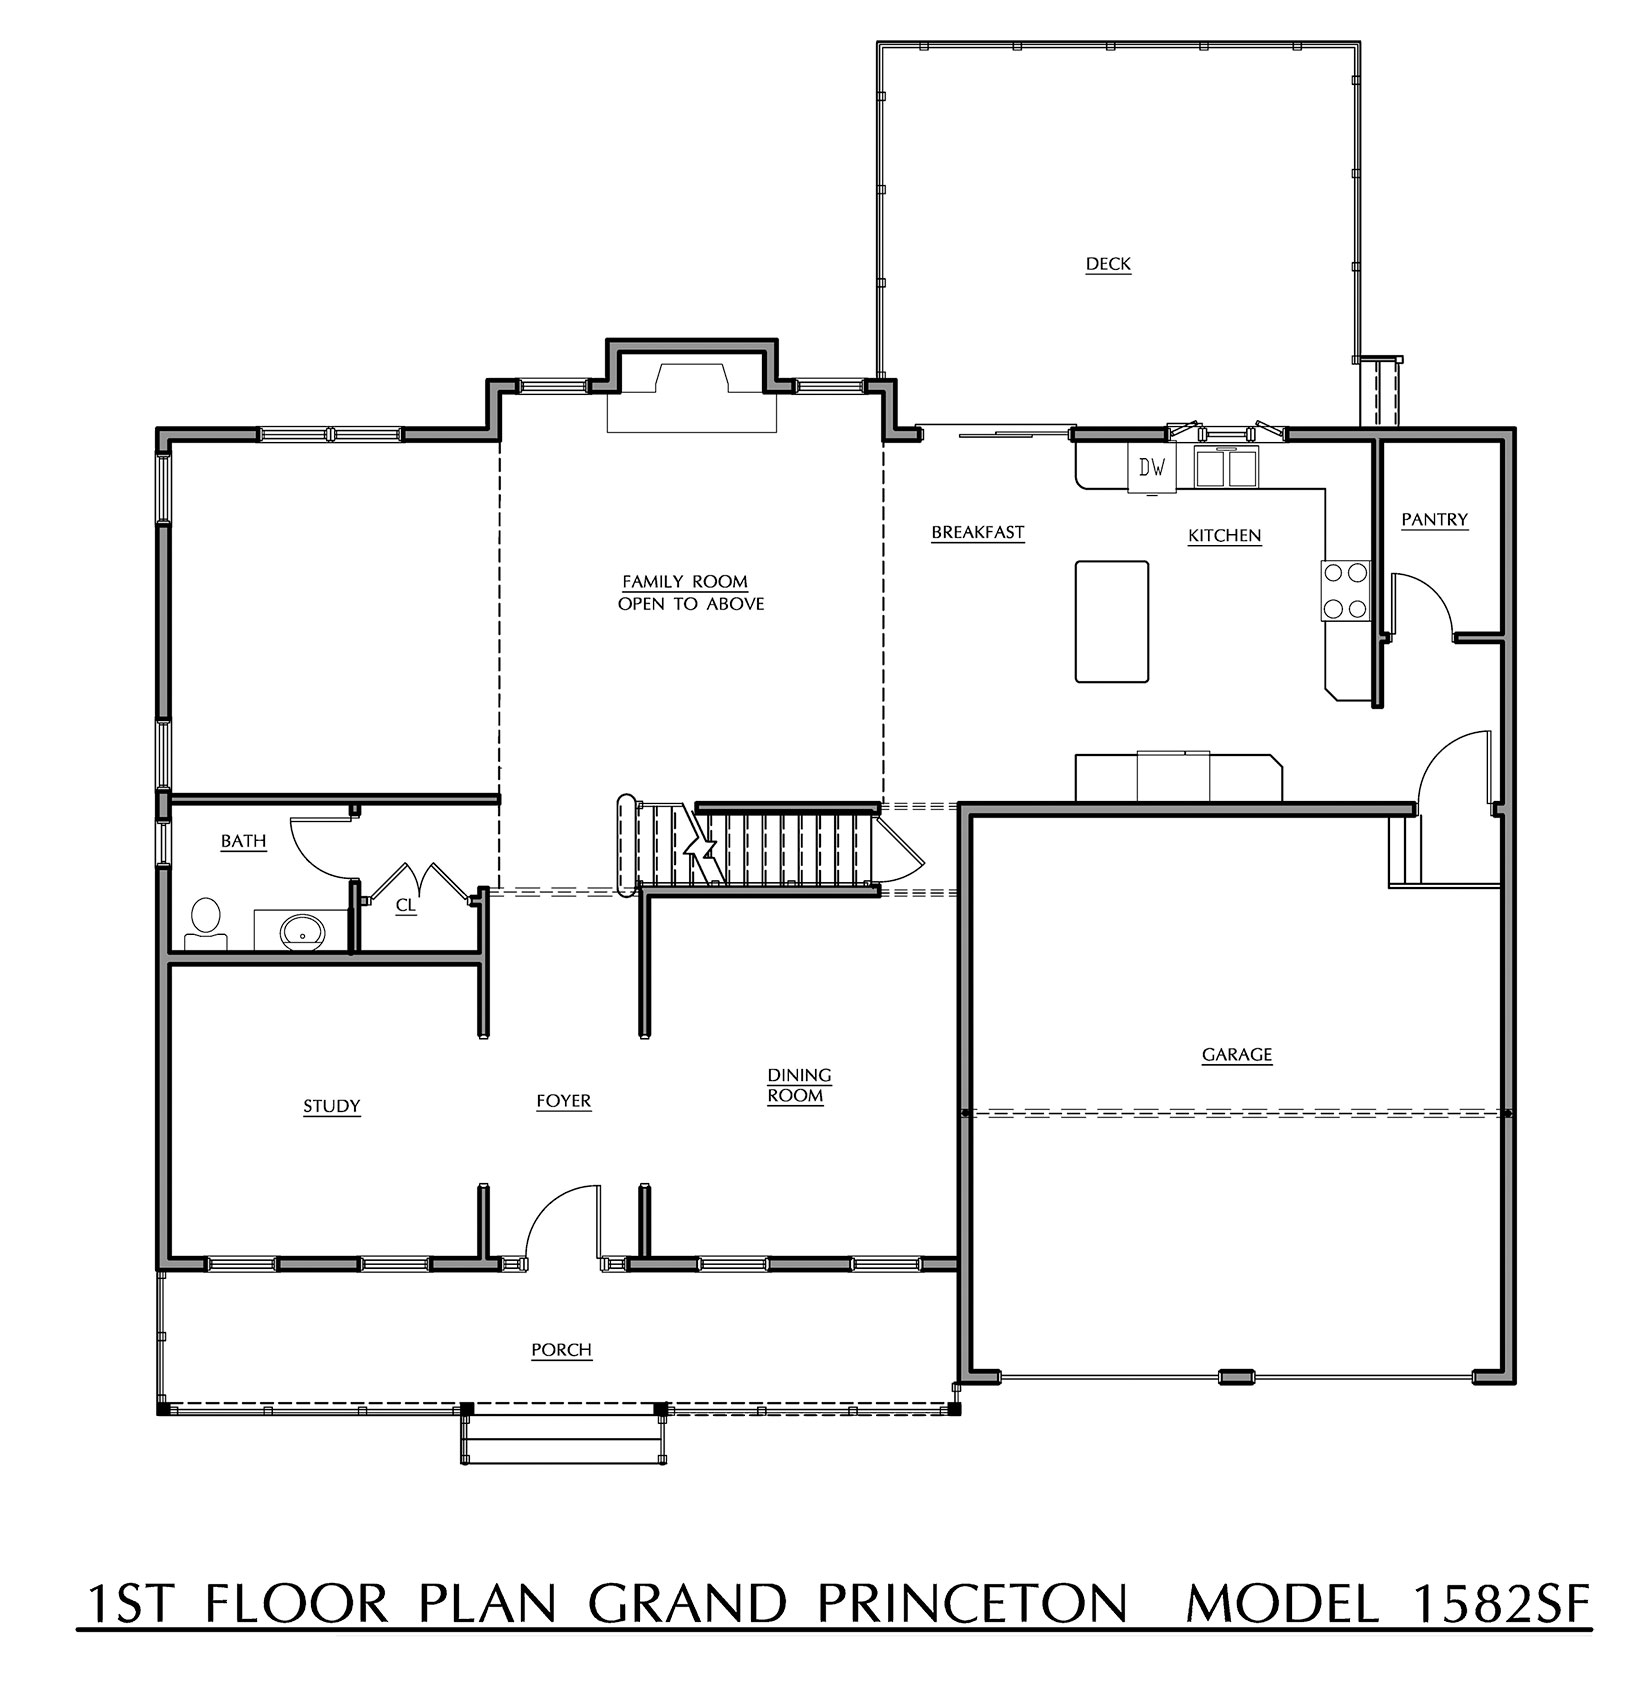 Grand Princeton - First Floor Plan